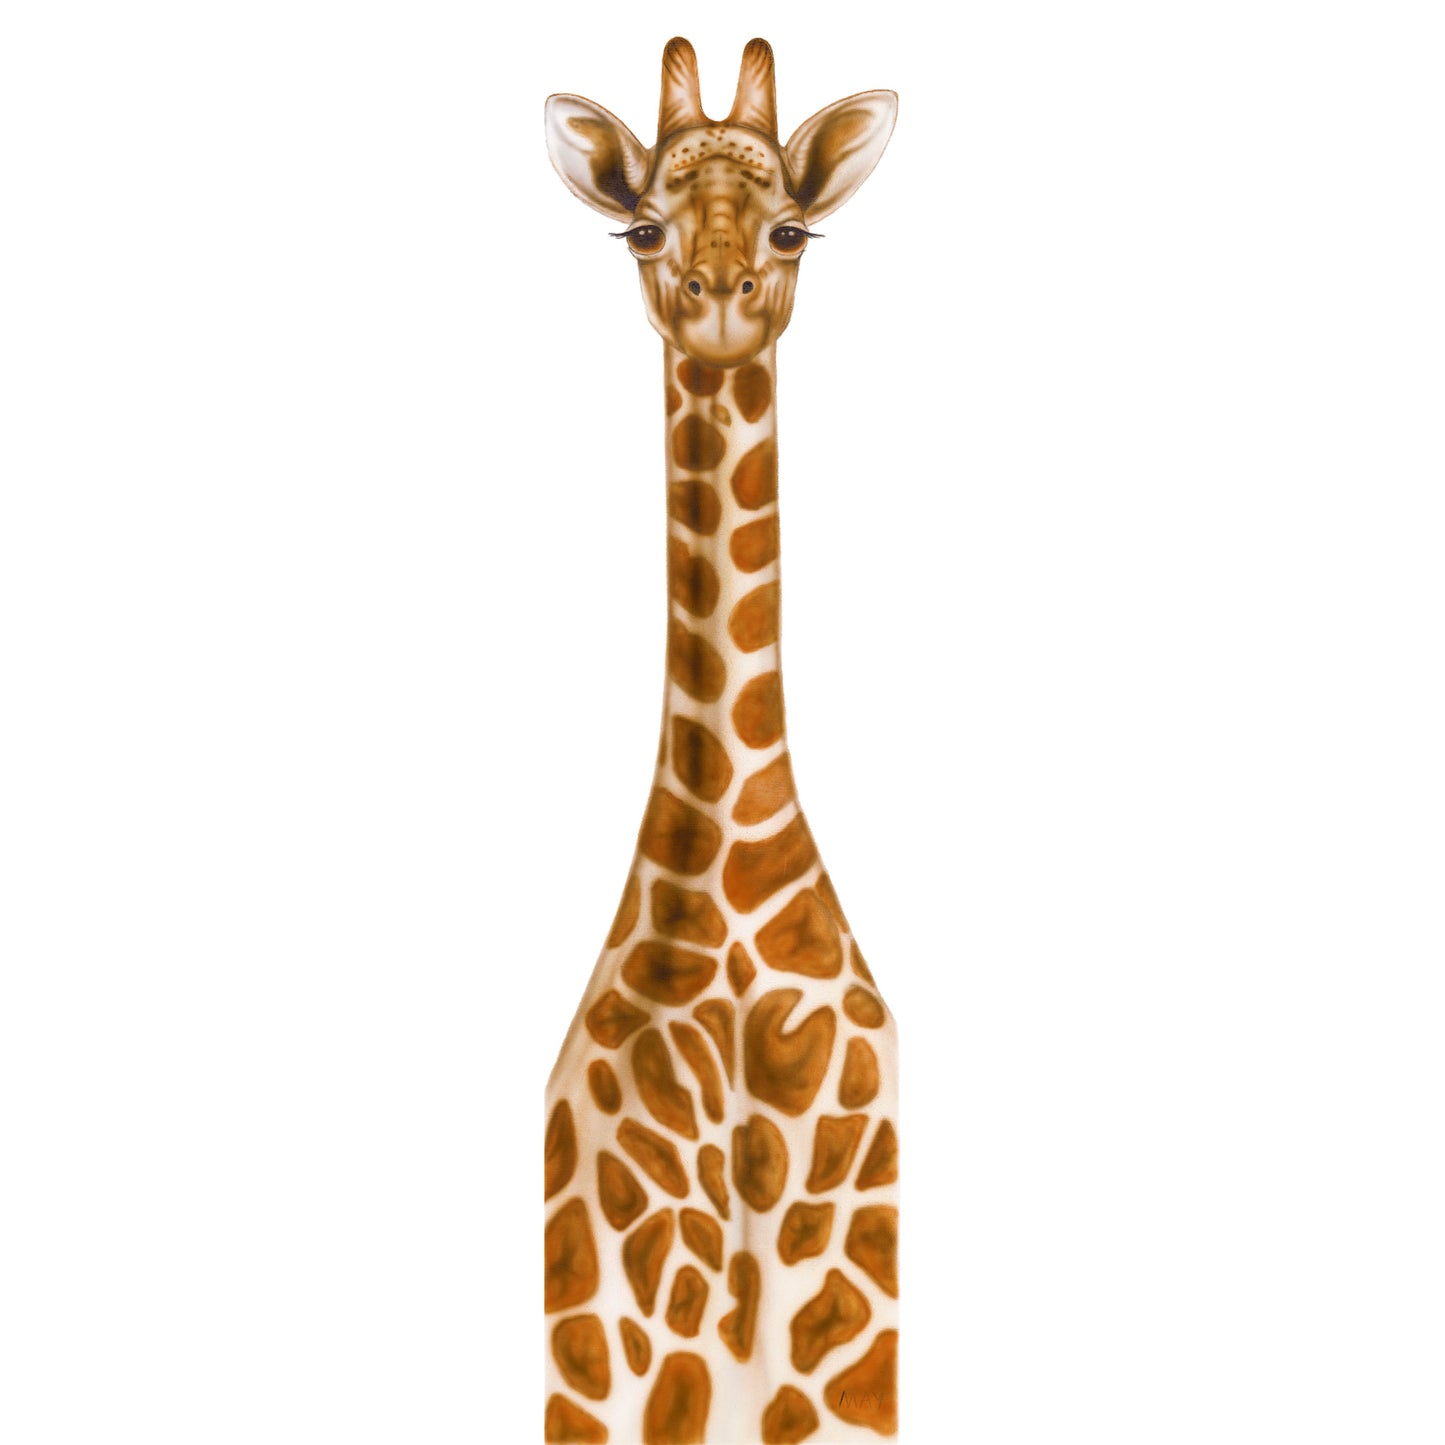 Totem Pole Baby - Giraffe